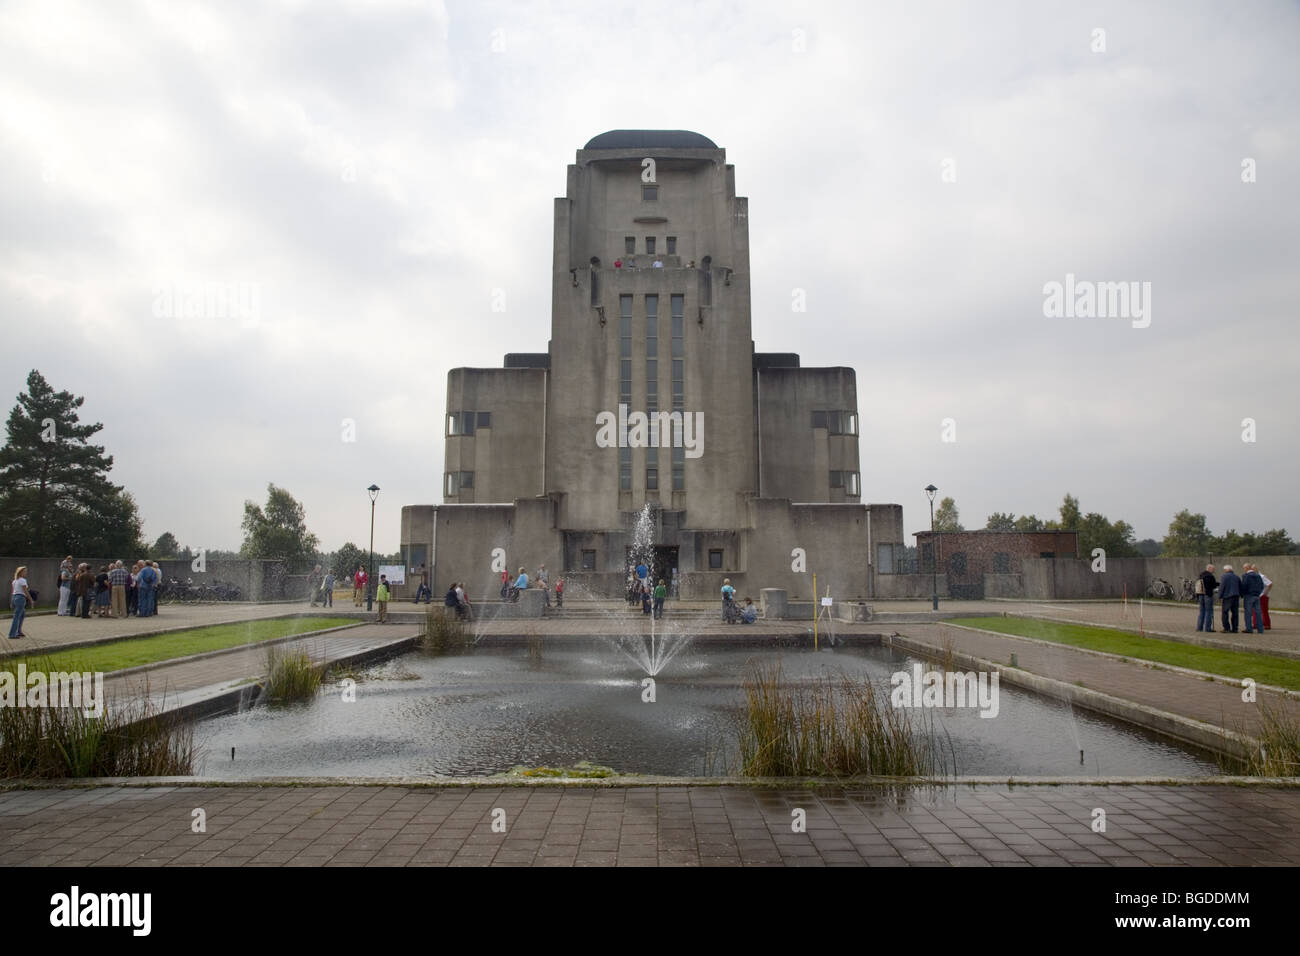 Cathedral like monumental building of the former Radio Kootwijk, Gelderland, Netherlands Stock Photo